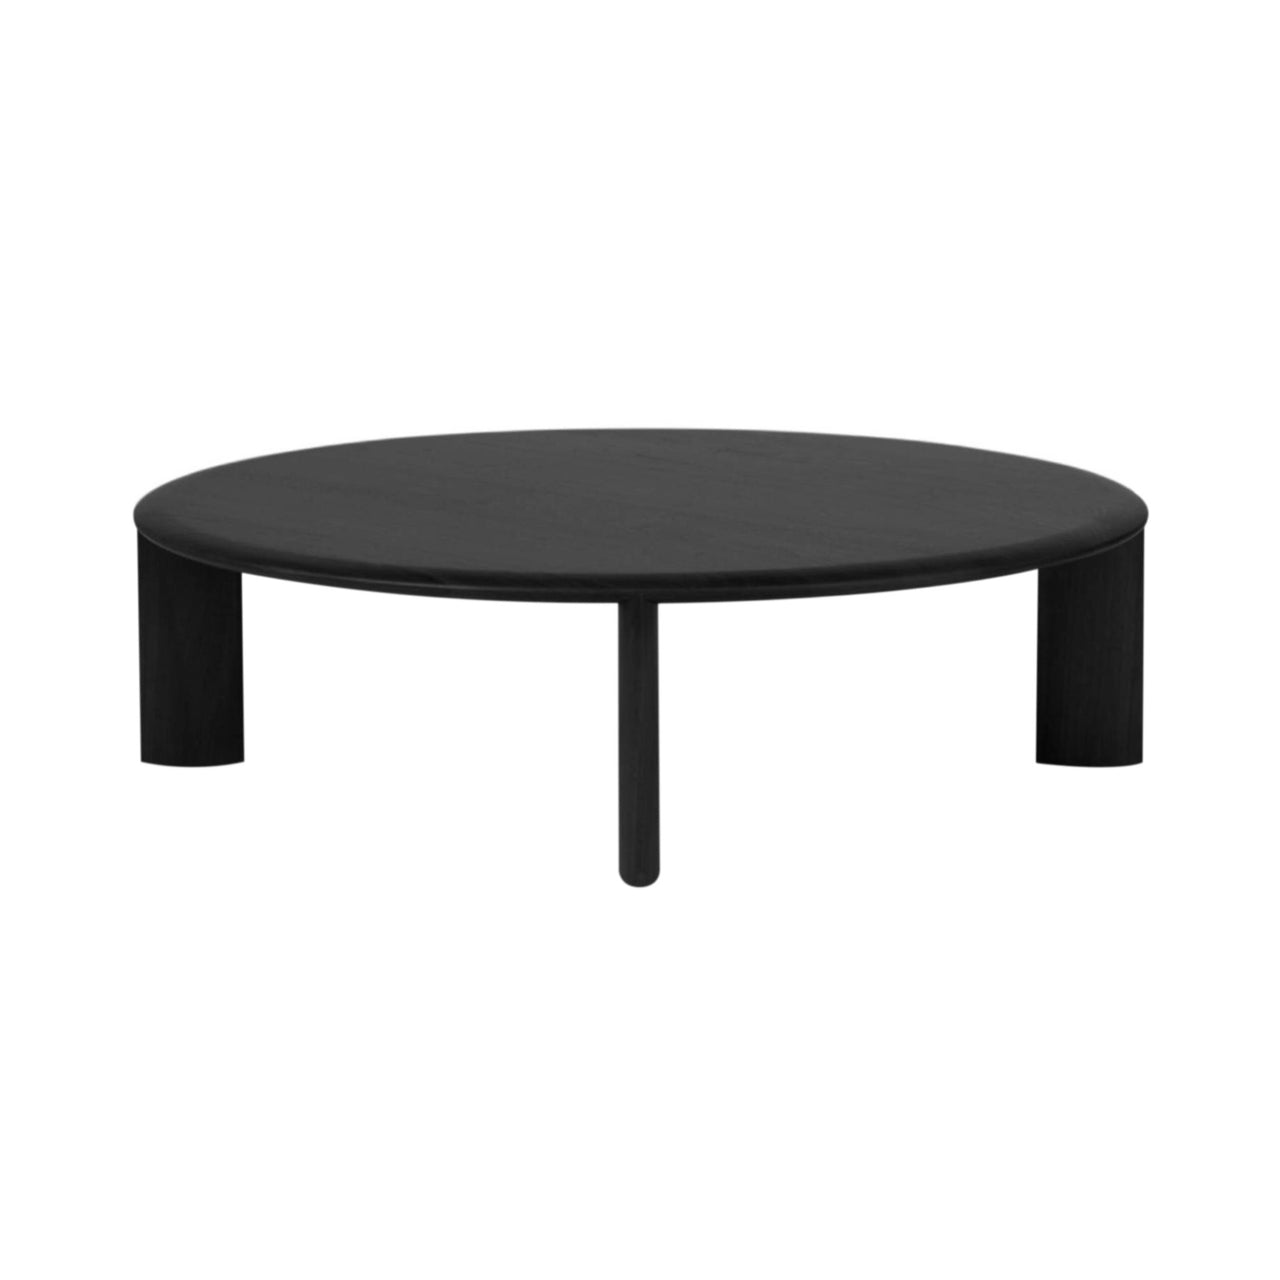 IO Coffee Table: Large + Black